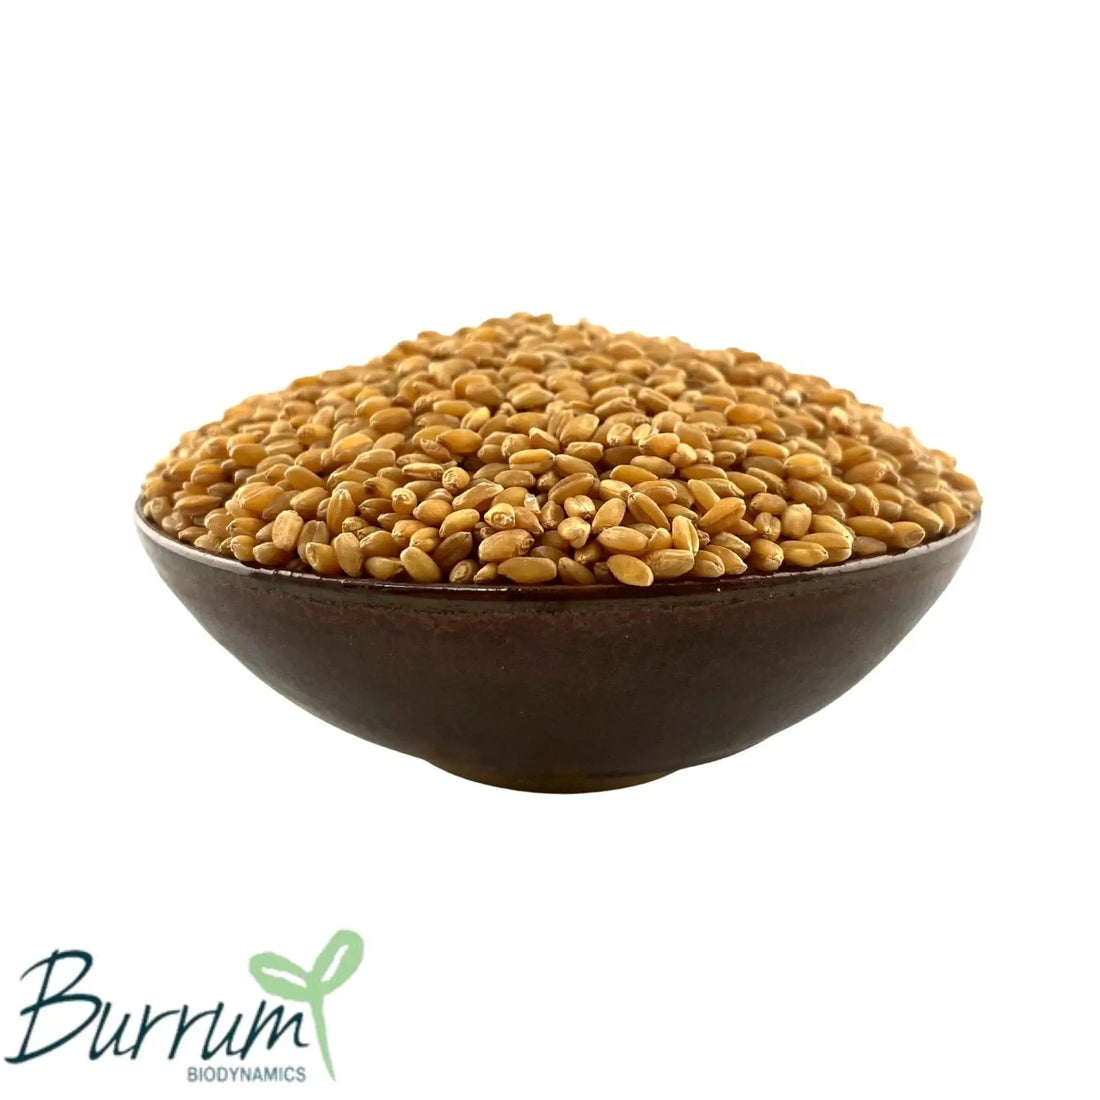 Wheat Grain Biodynamic 1kg-Pulse & Grain-Burrum Biodynamics-Sovereign Foods-Organic-Biodynamic-Grain-Home Milling-Australian Grown